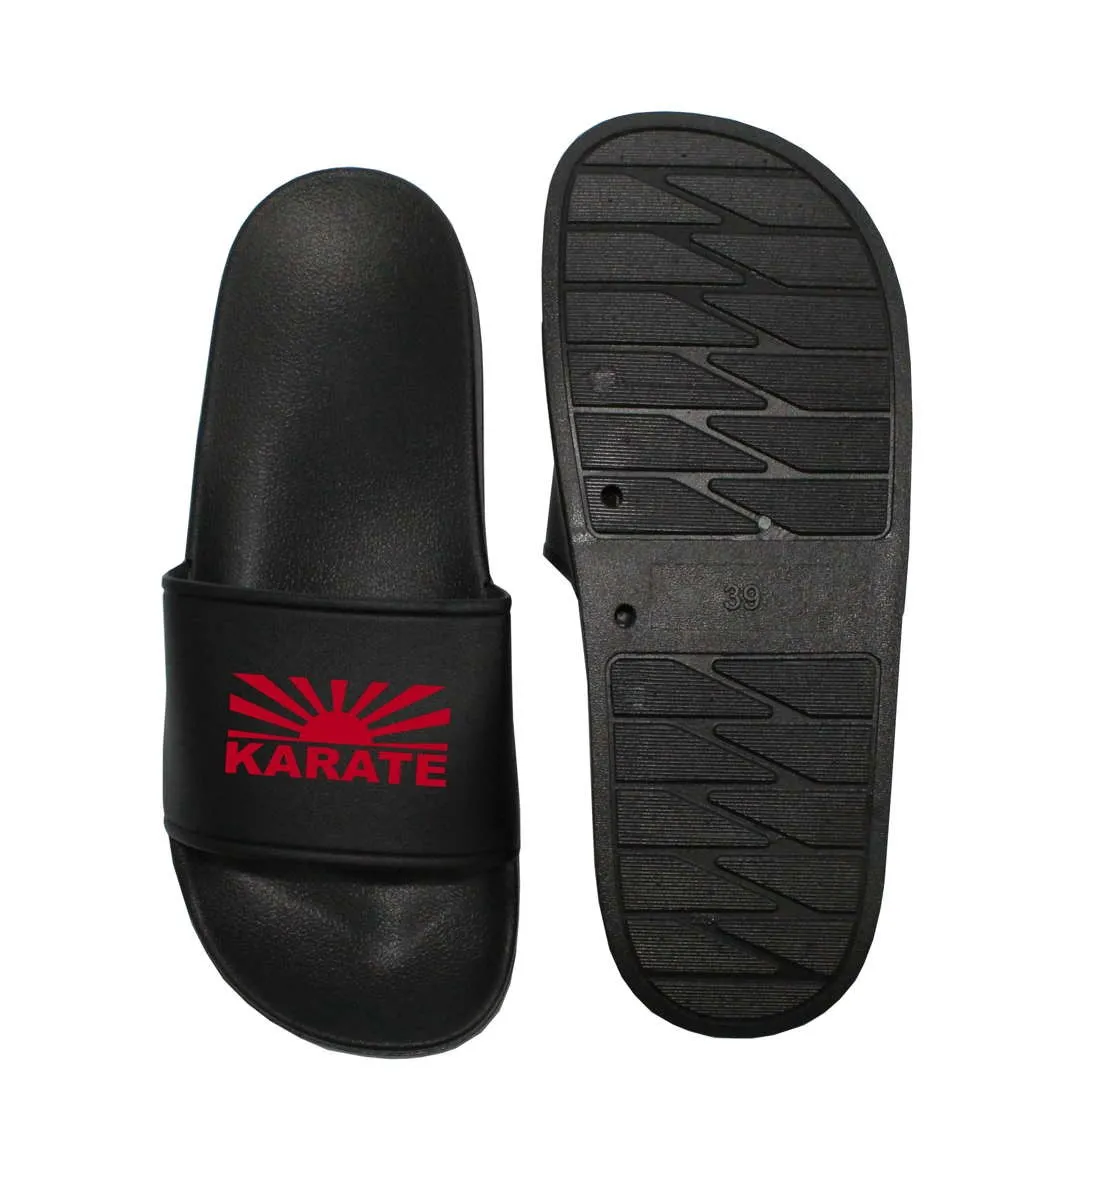 Bath slippers karate black japanese flag